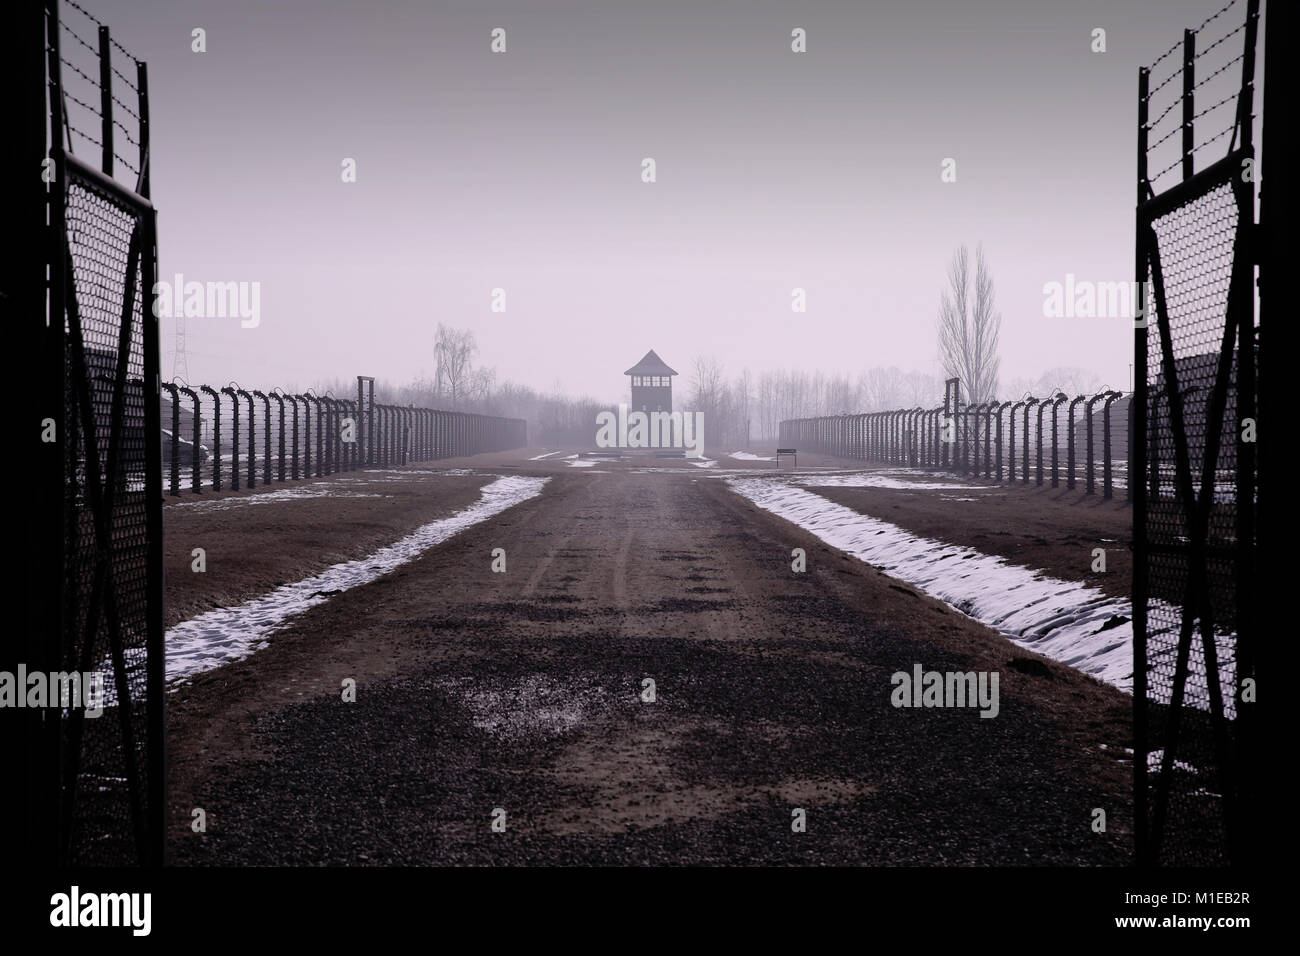 Puertas abiertas dentro de Auschwitz II - Birkenau Museum - Oswiecim - Polonia Foto de stock